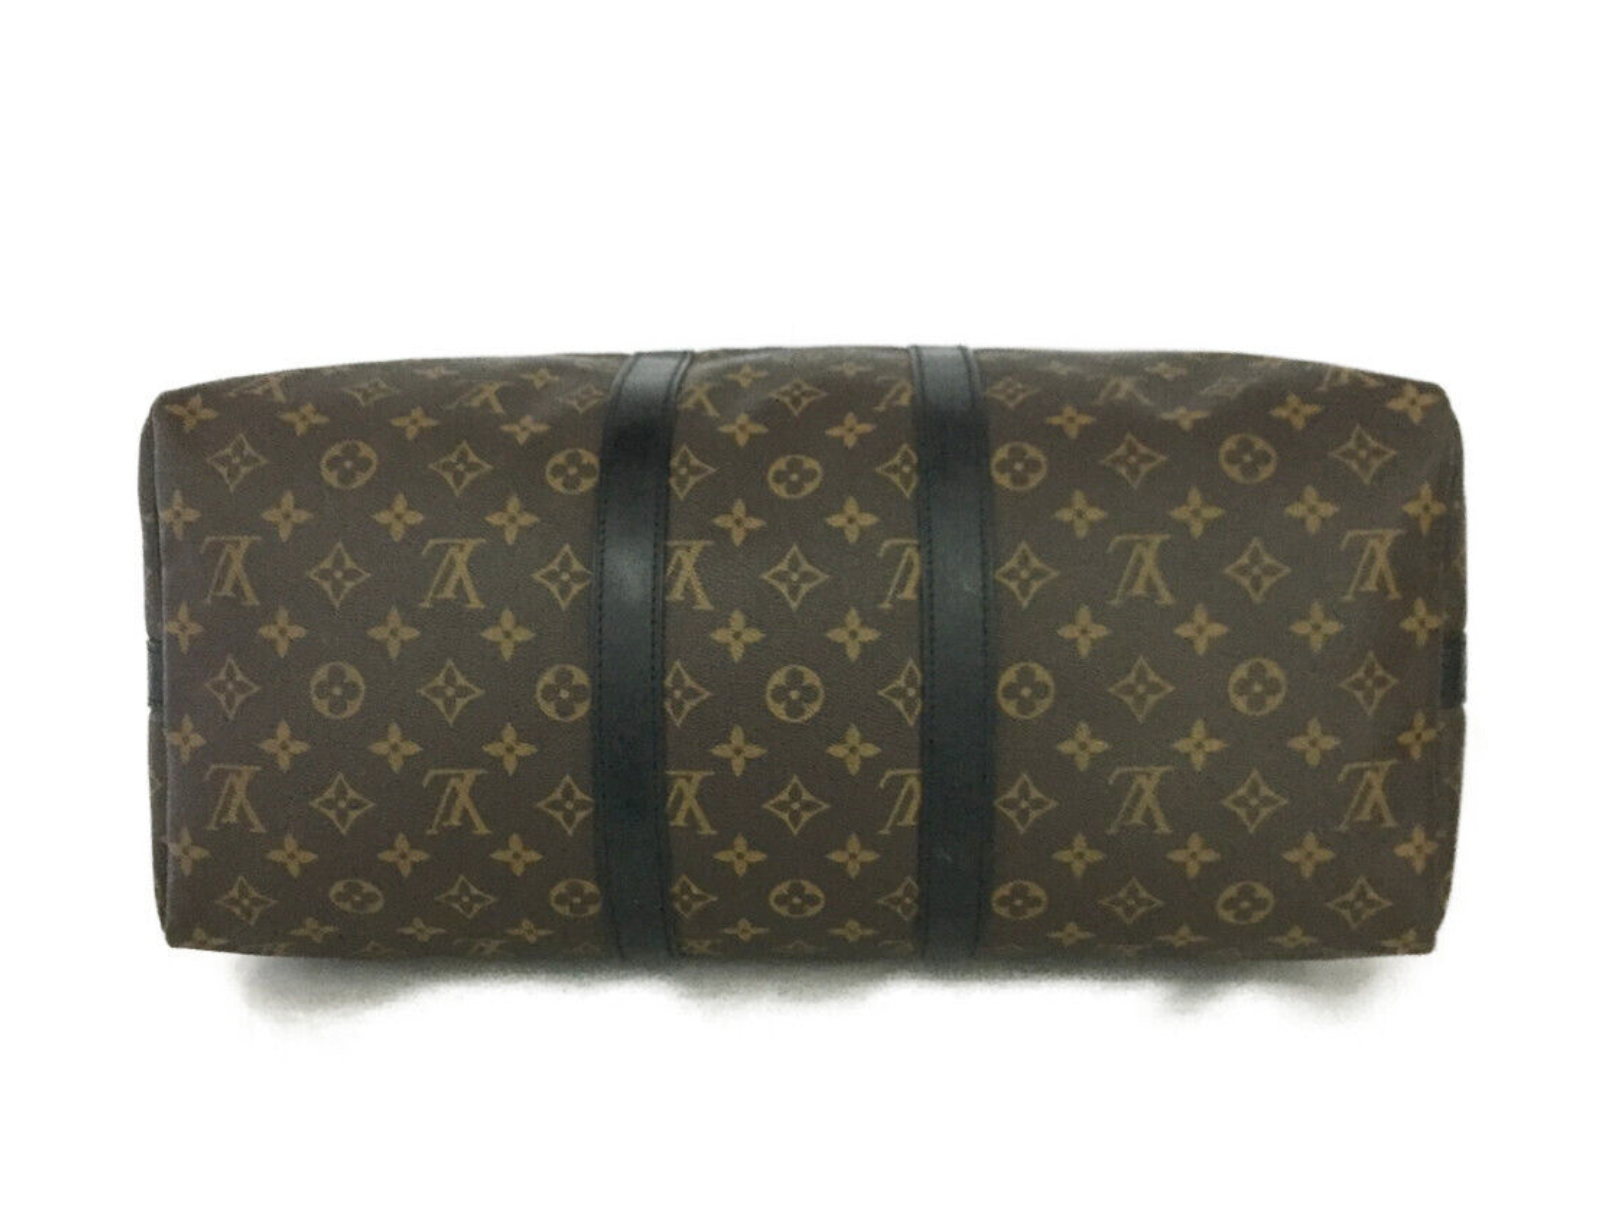 Preloved Louis Vuitton Keepall 45  Bandouliere (NO STRAP) Macassar Monogram with Black Leather Travel Bag DU1114 031123